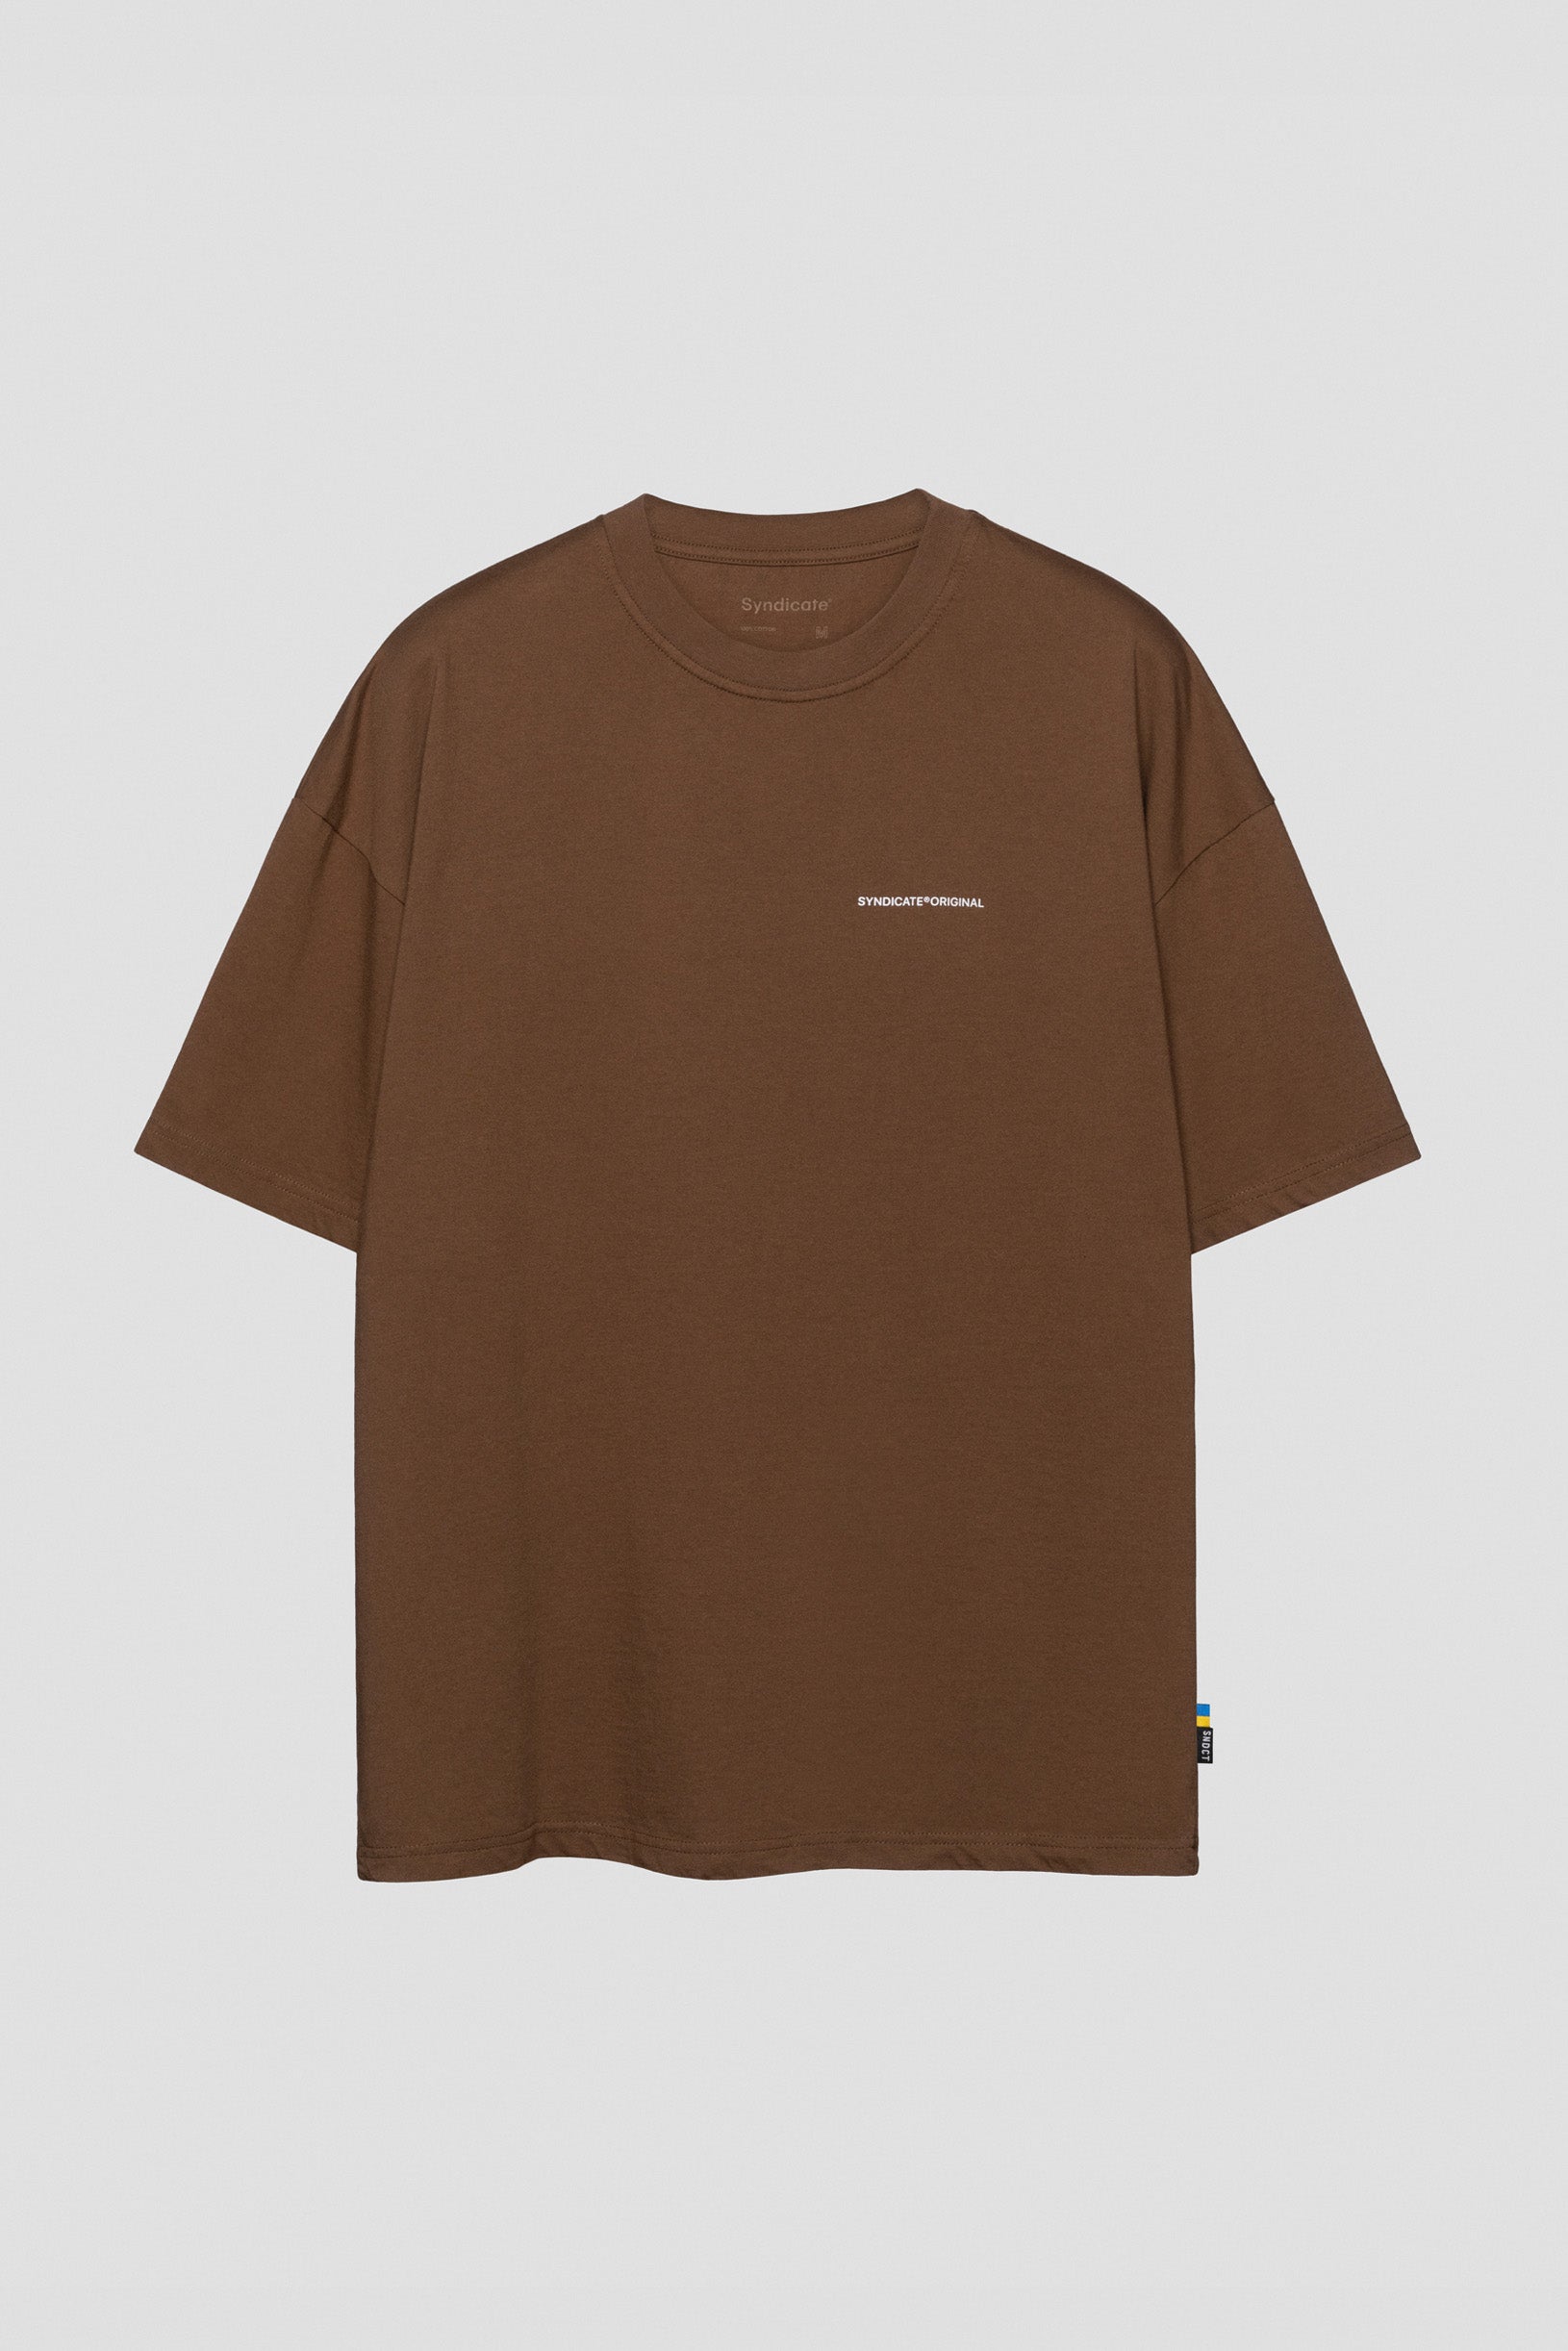 Syndicate original oversize t-shirt brown